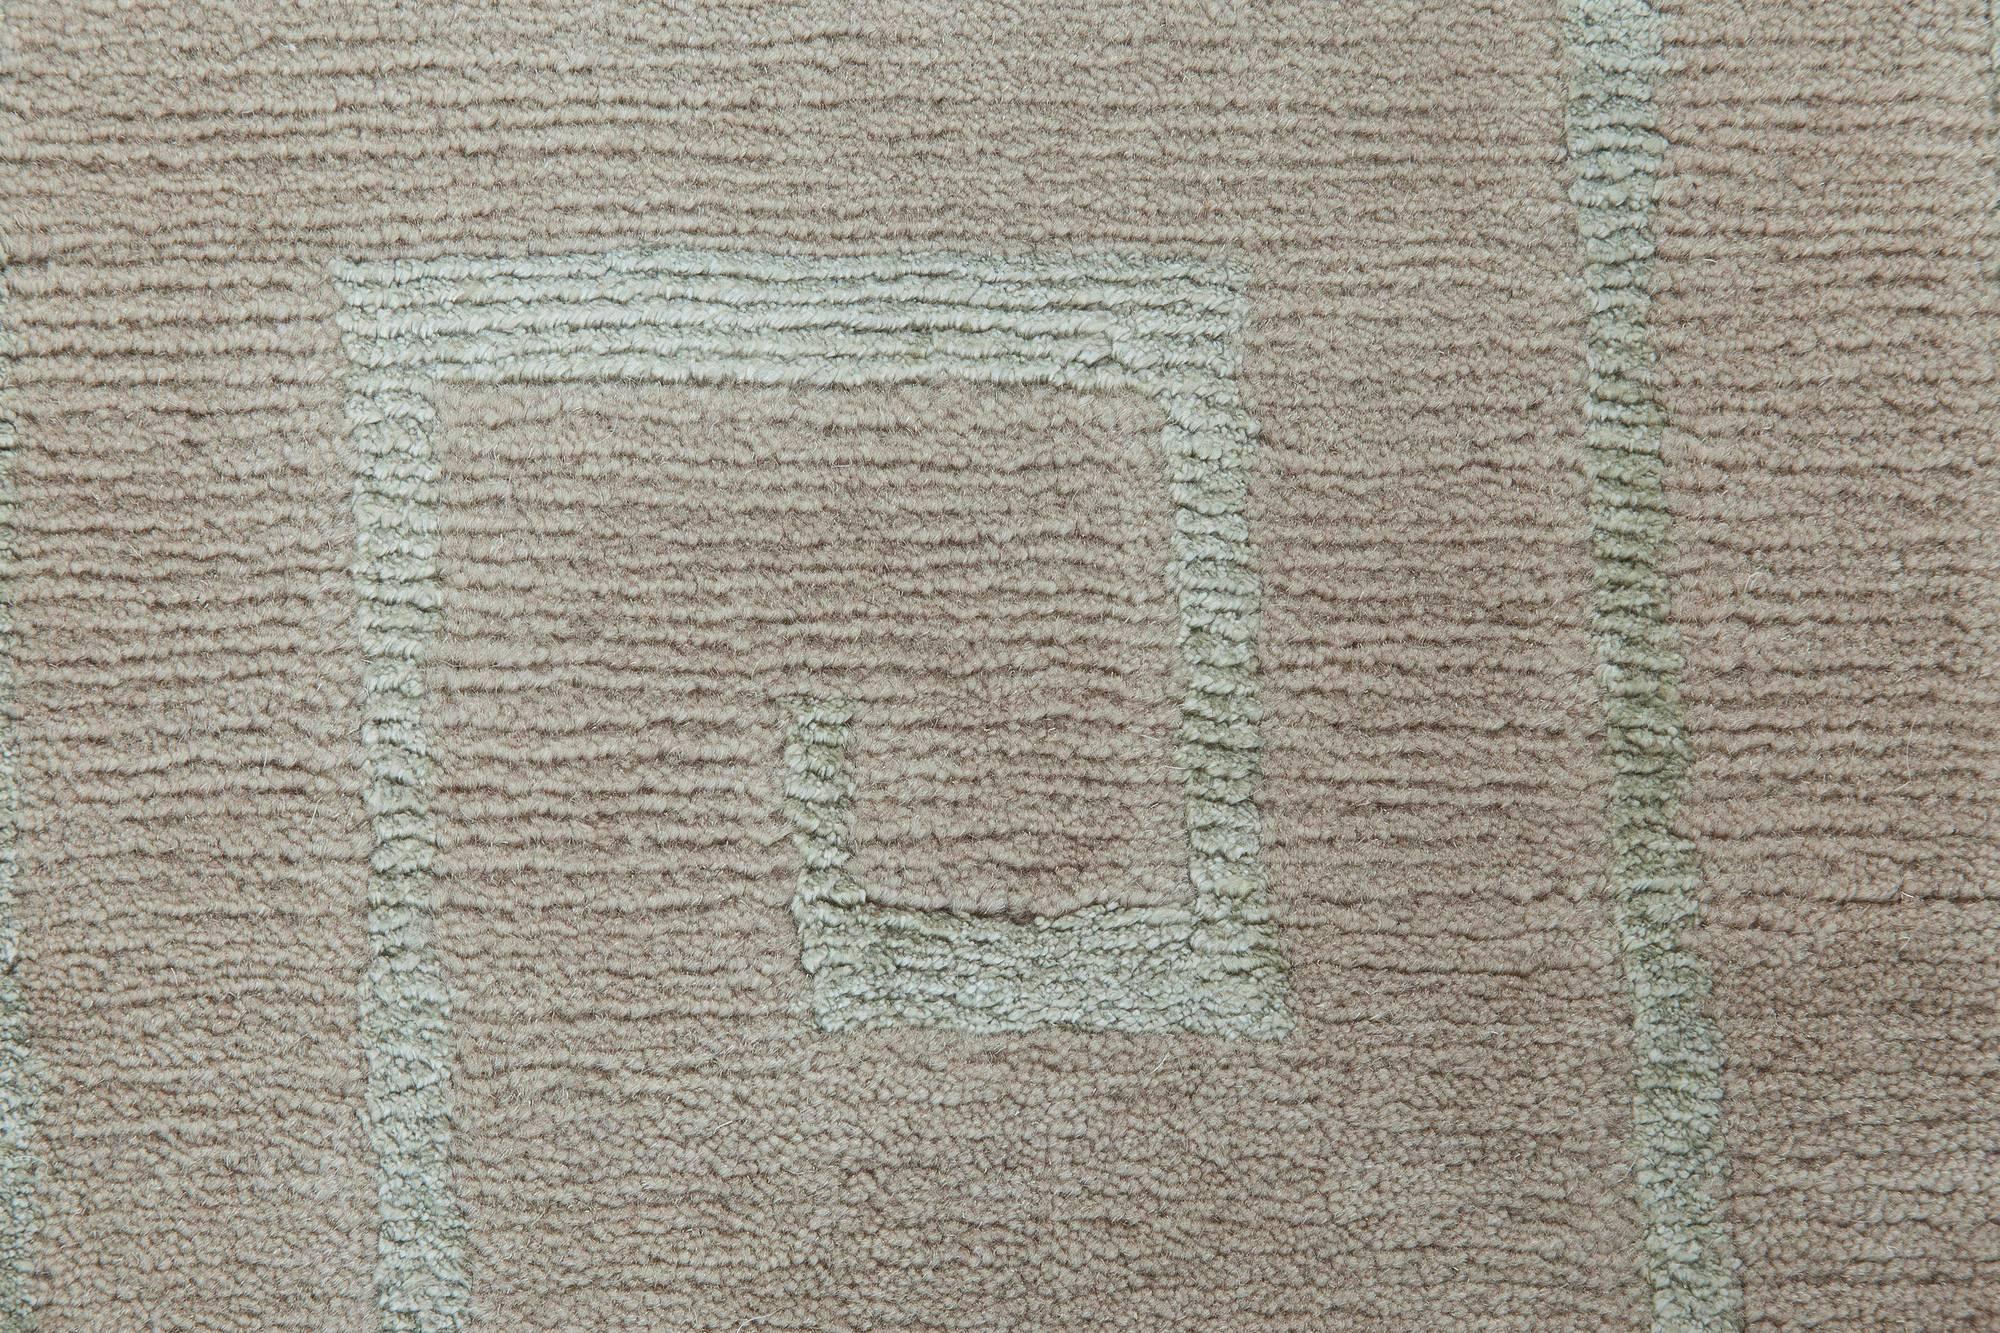 Contemporary Greek key Design wool rug by Doris Leslie Blau
Size: 6'0